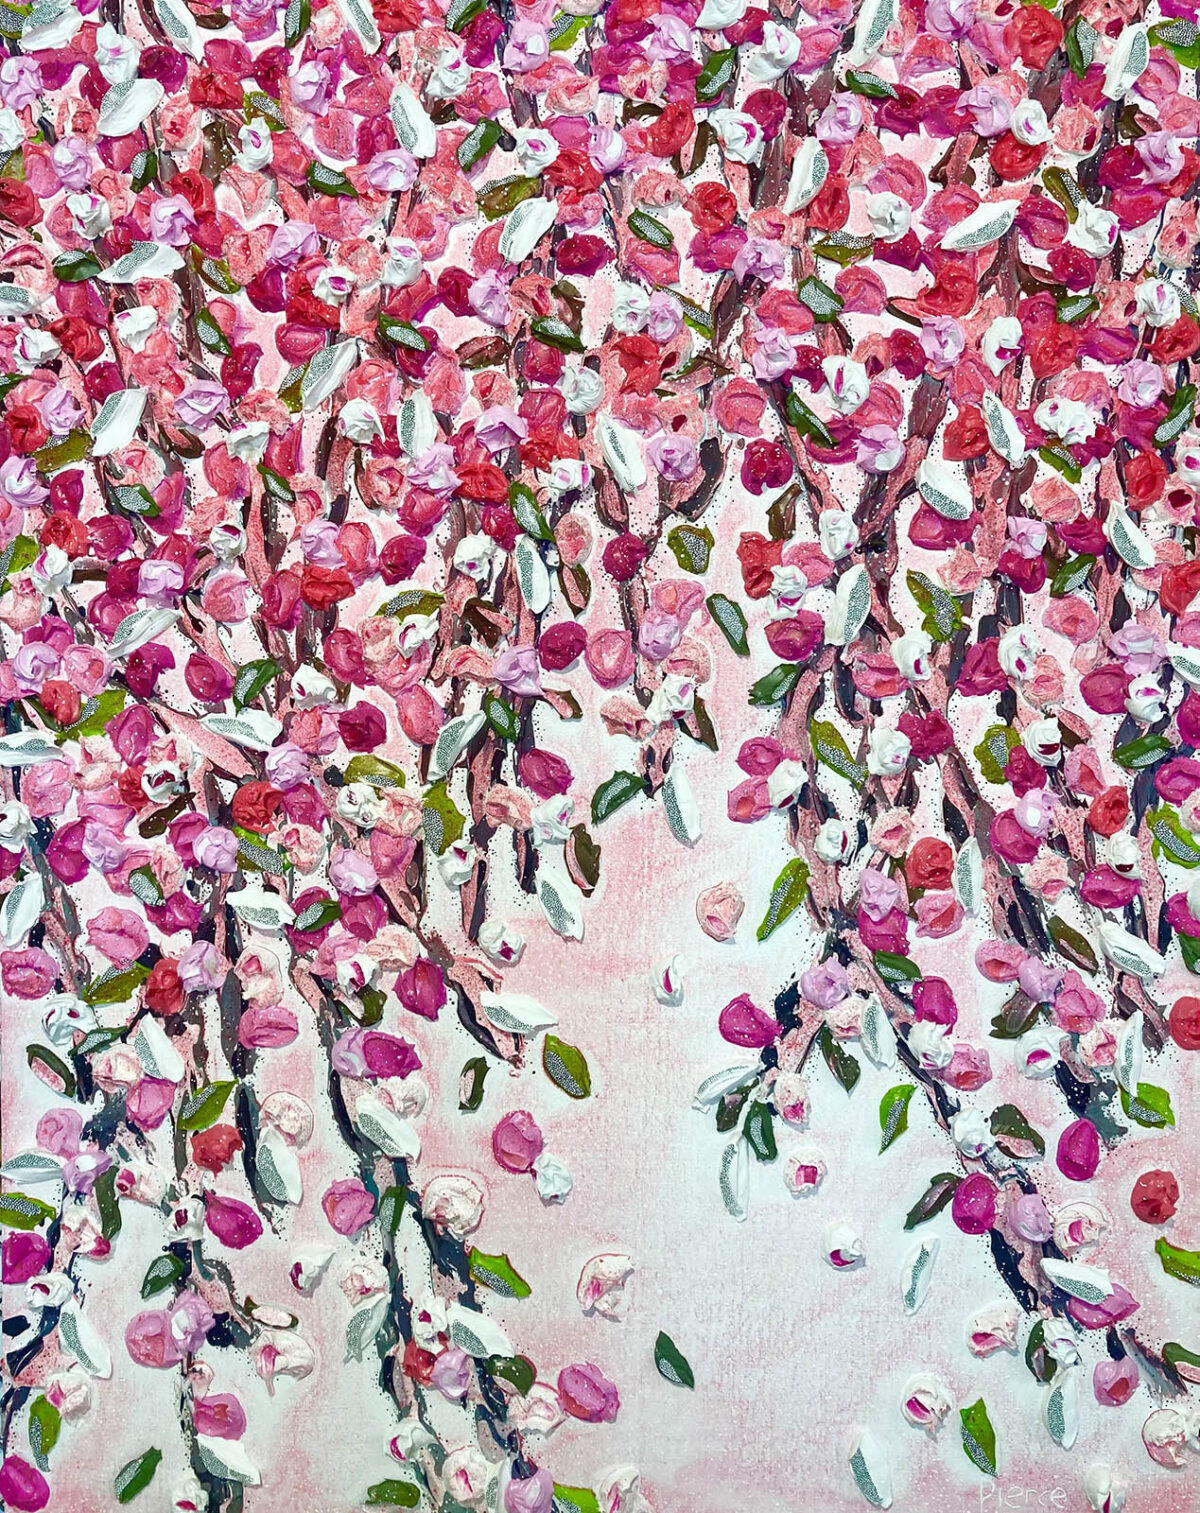 345. REBECCA PIERCE - Blossoms 2 - 150 x 120cm acrylic on canvas on board- 9,500.00AUD